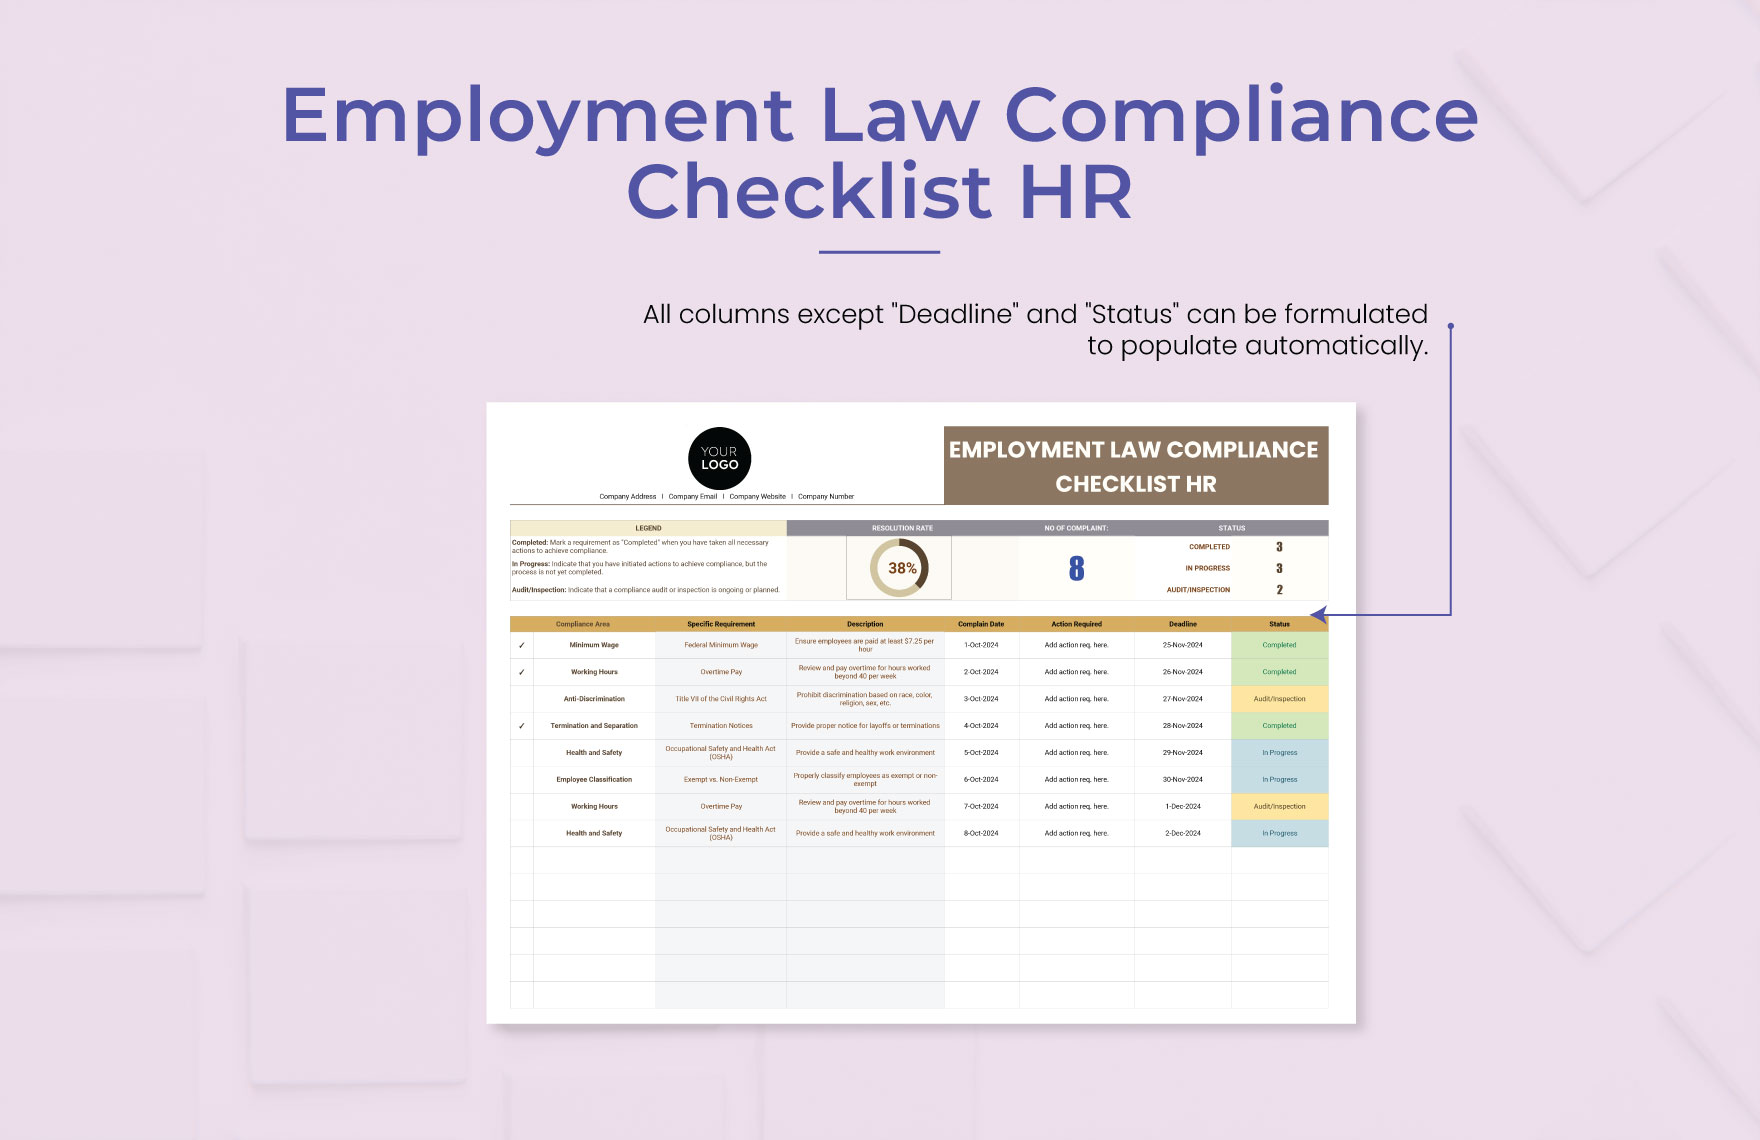 Employment Law Compliance Checklist HR Template